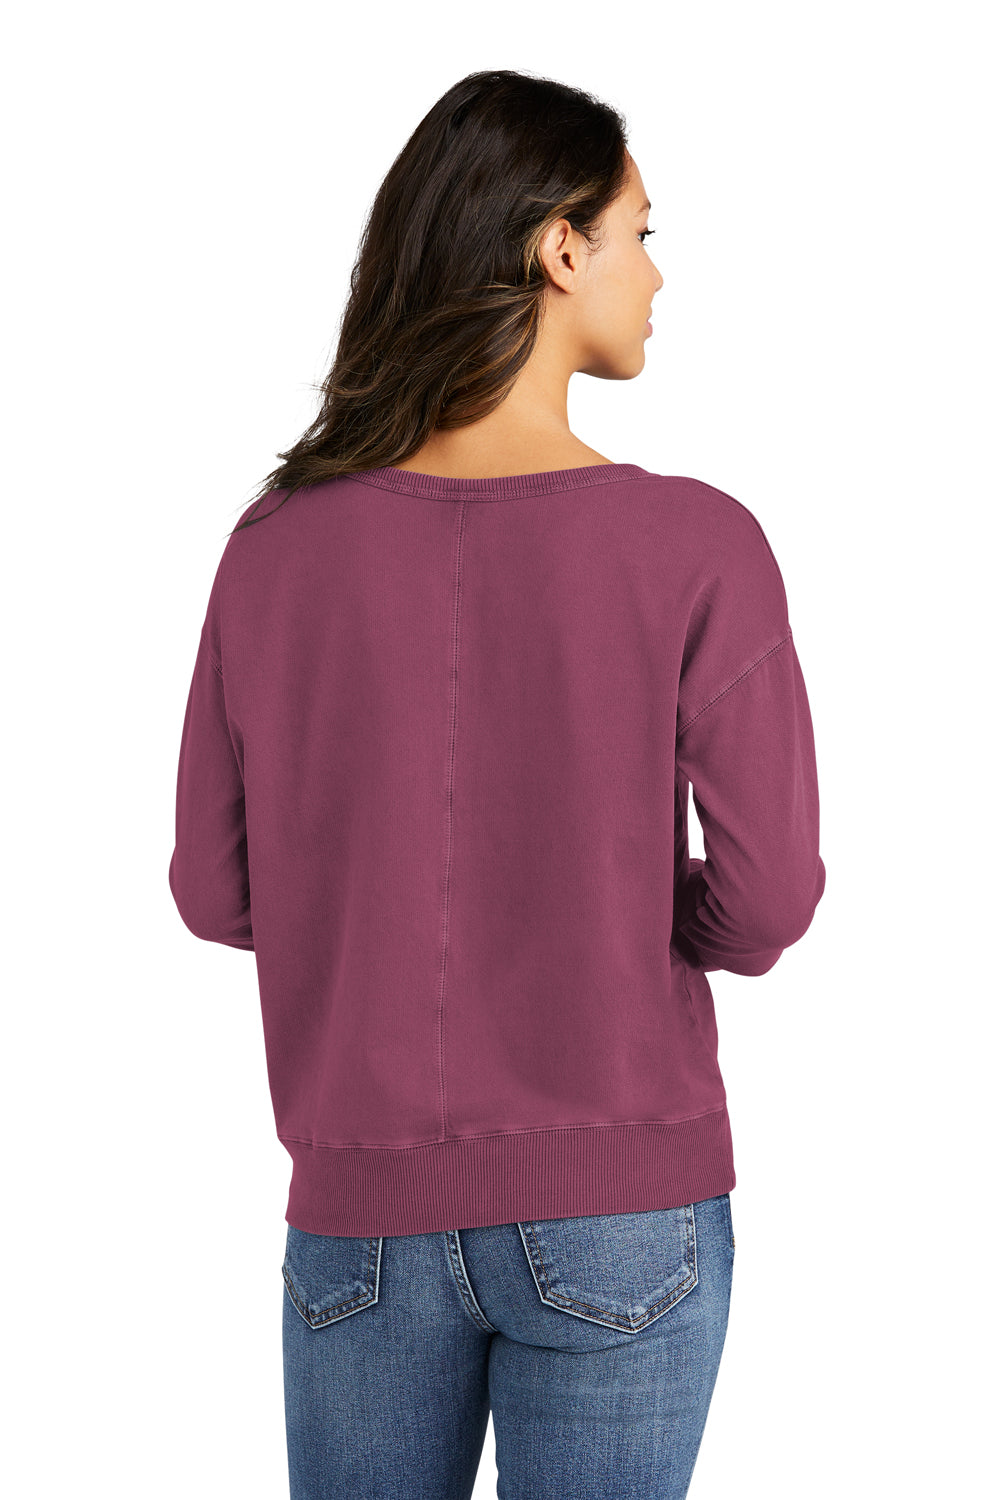 Port & Company LPC098V Womens Beach Wash Garment Dyed V-Neck Sweatshirt Vintage Raspberry Back